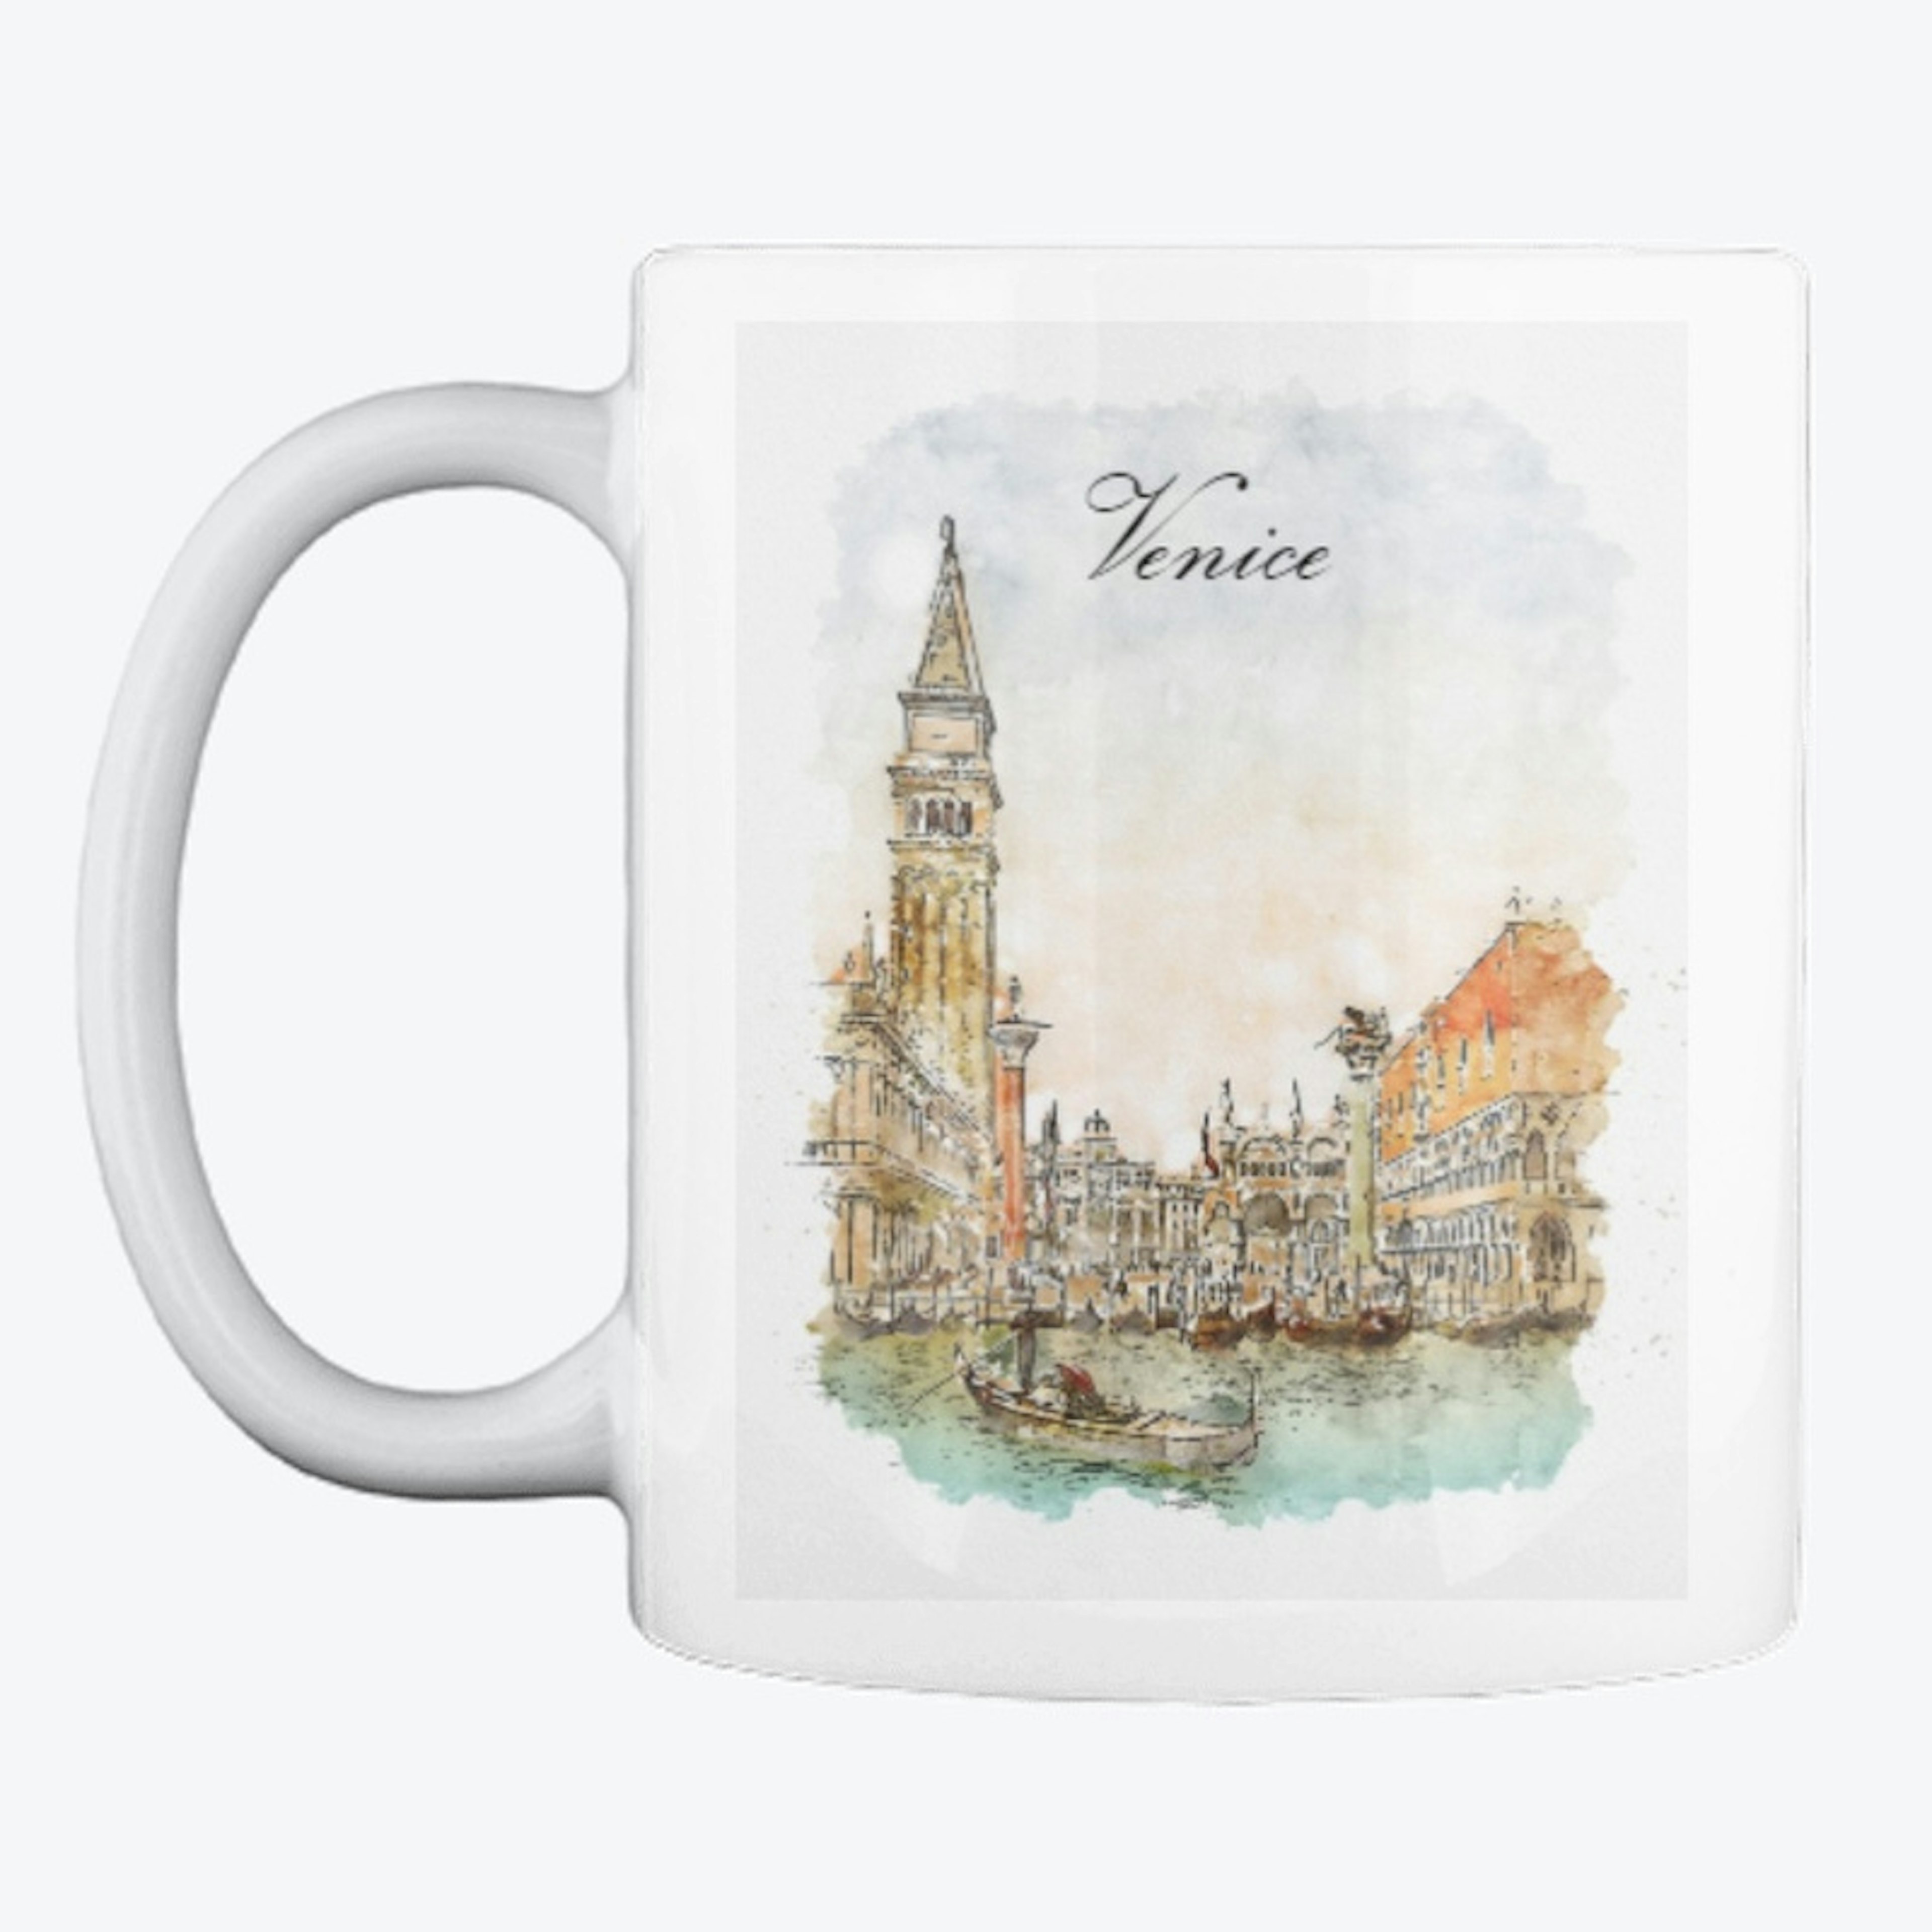 Venezia- Venice Mug